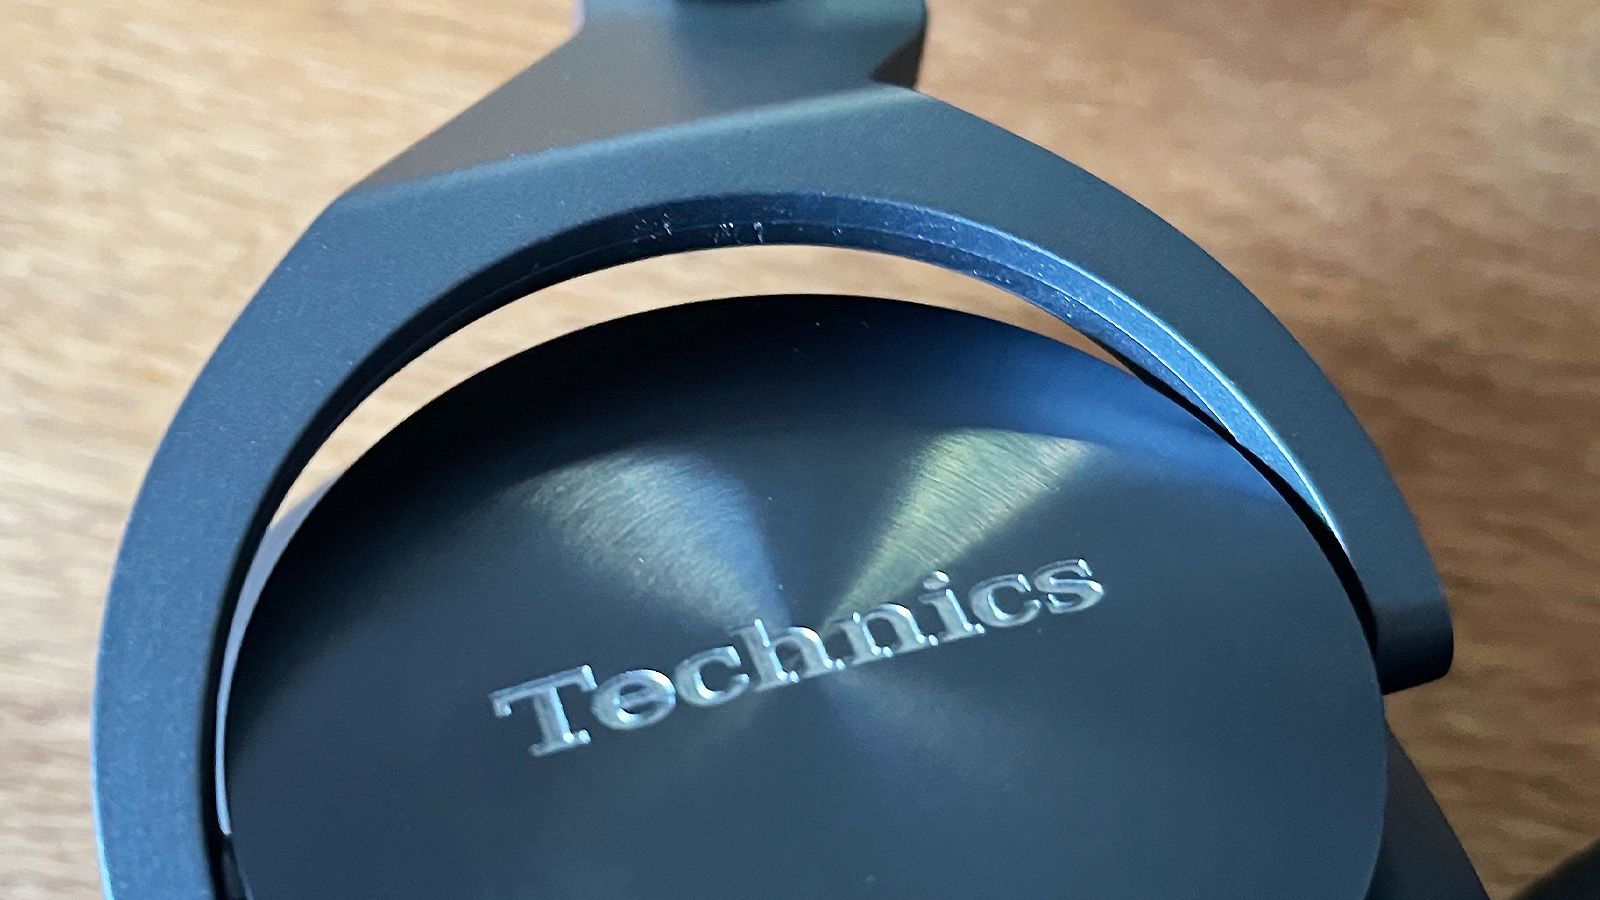 Technics A800 Review